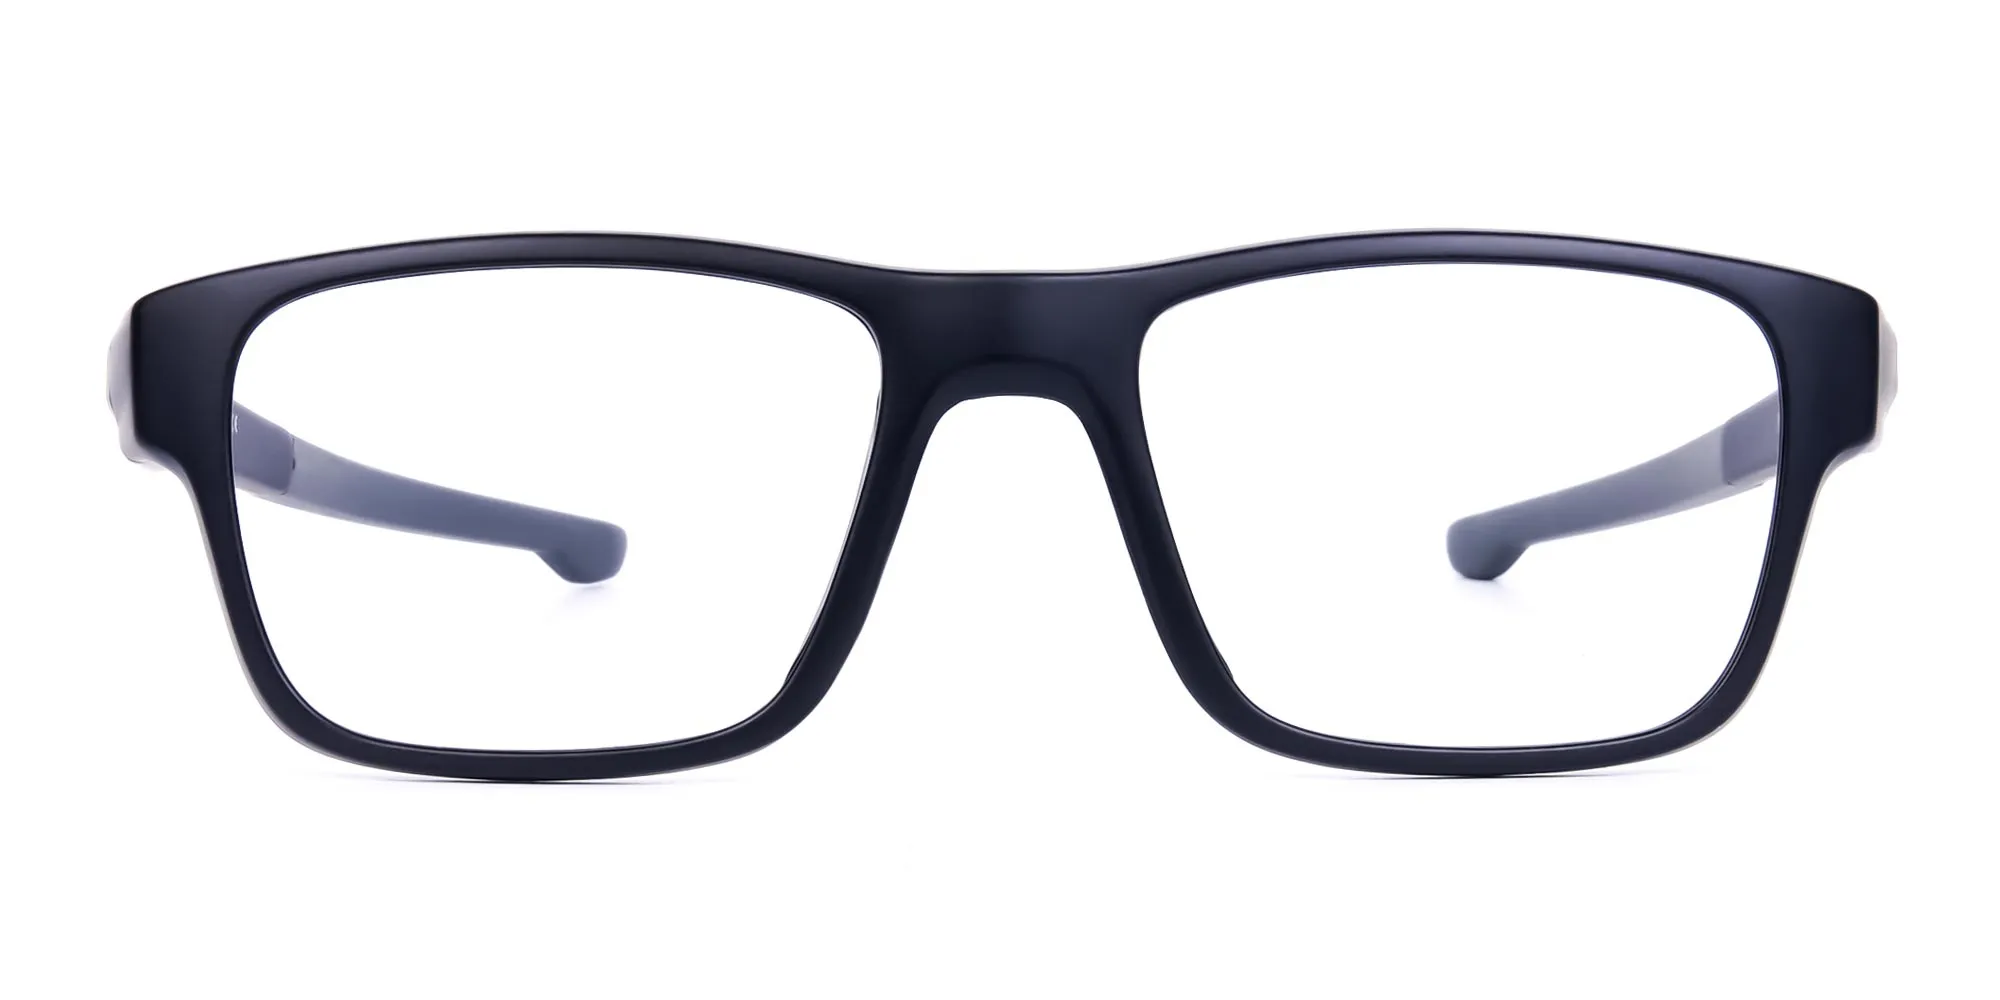 Rectangular Matte Black and Grey sports goggles